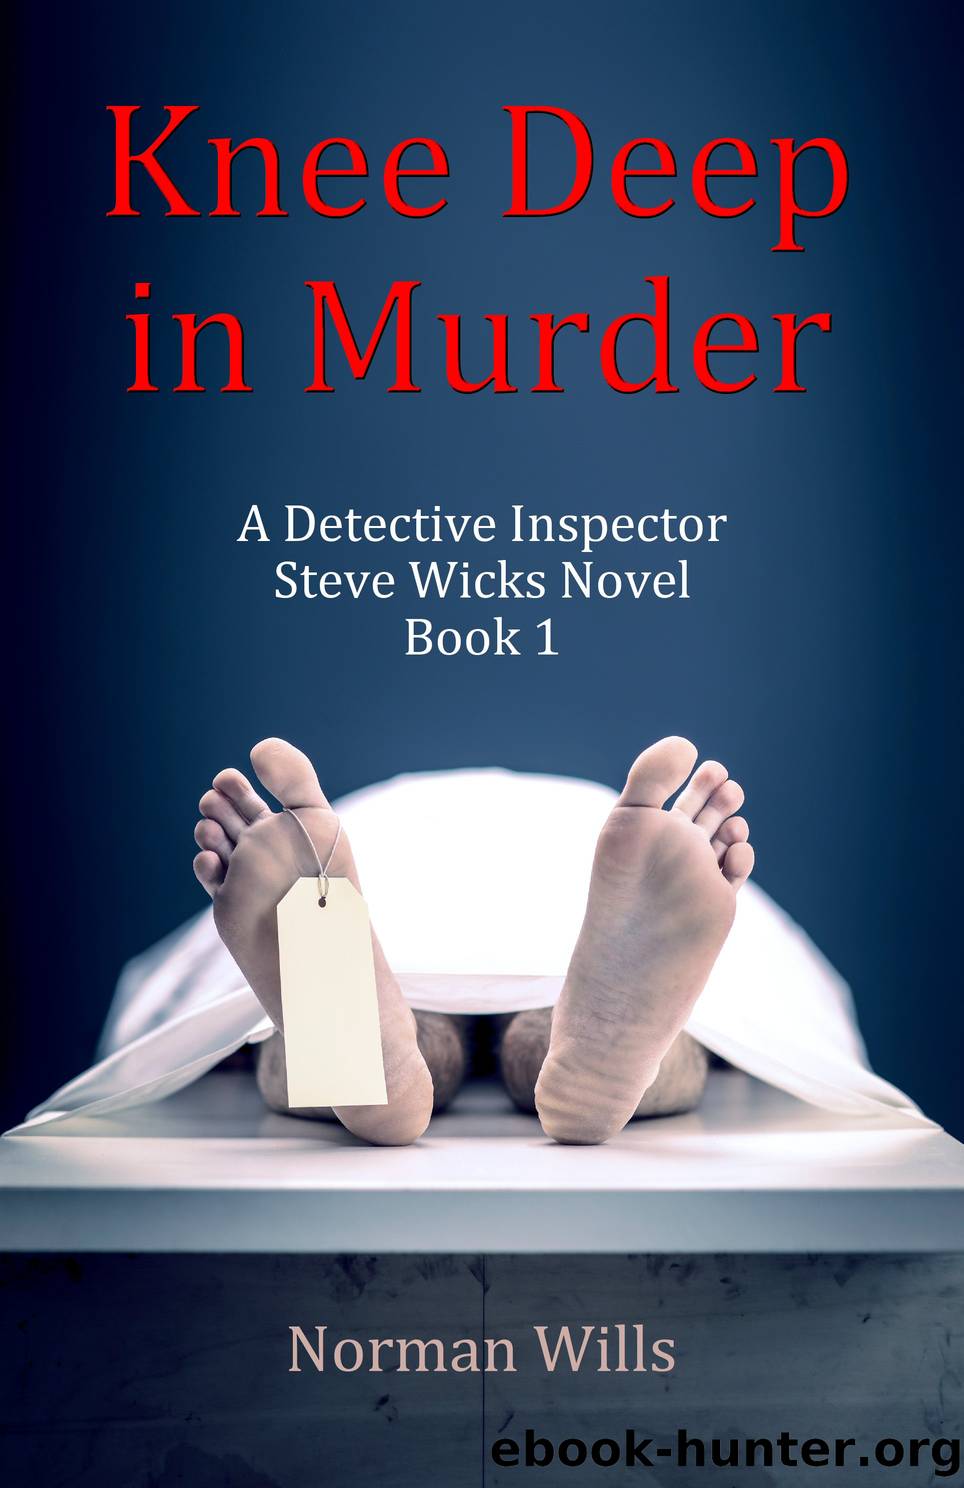 Knee Deep in Murder by Norman Wills